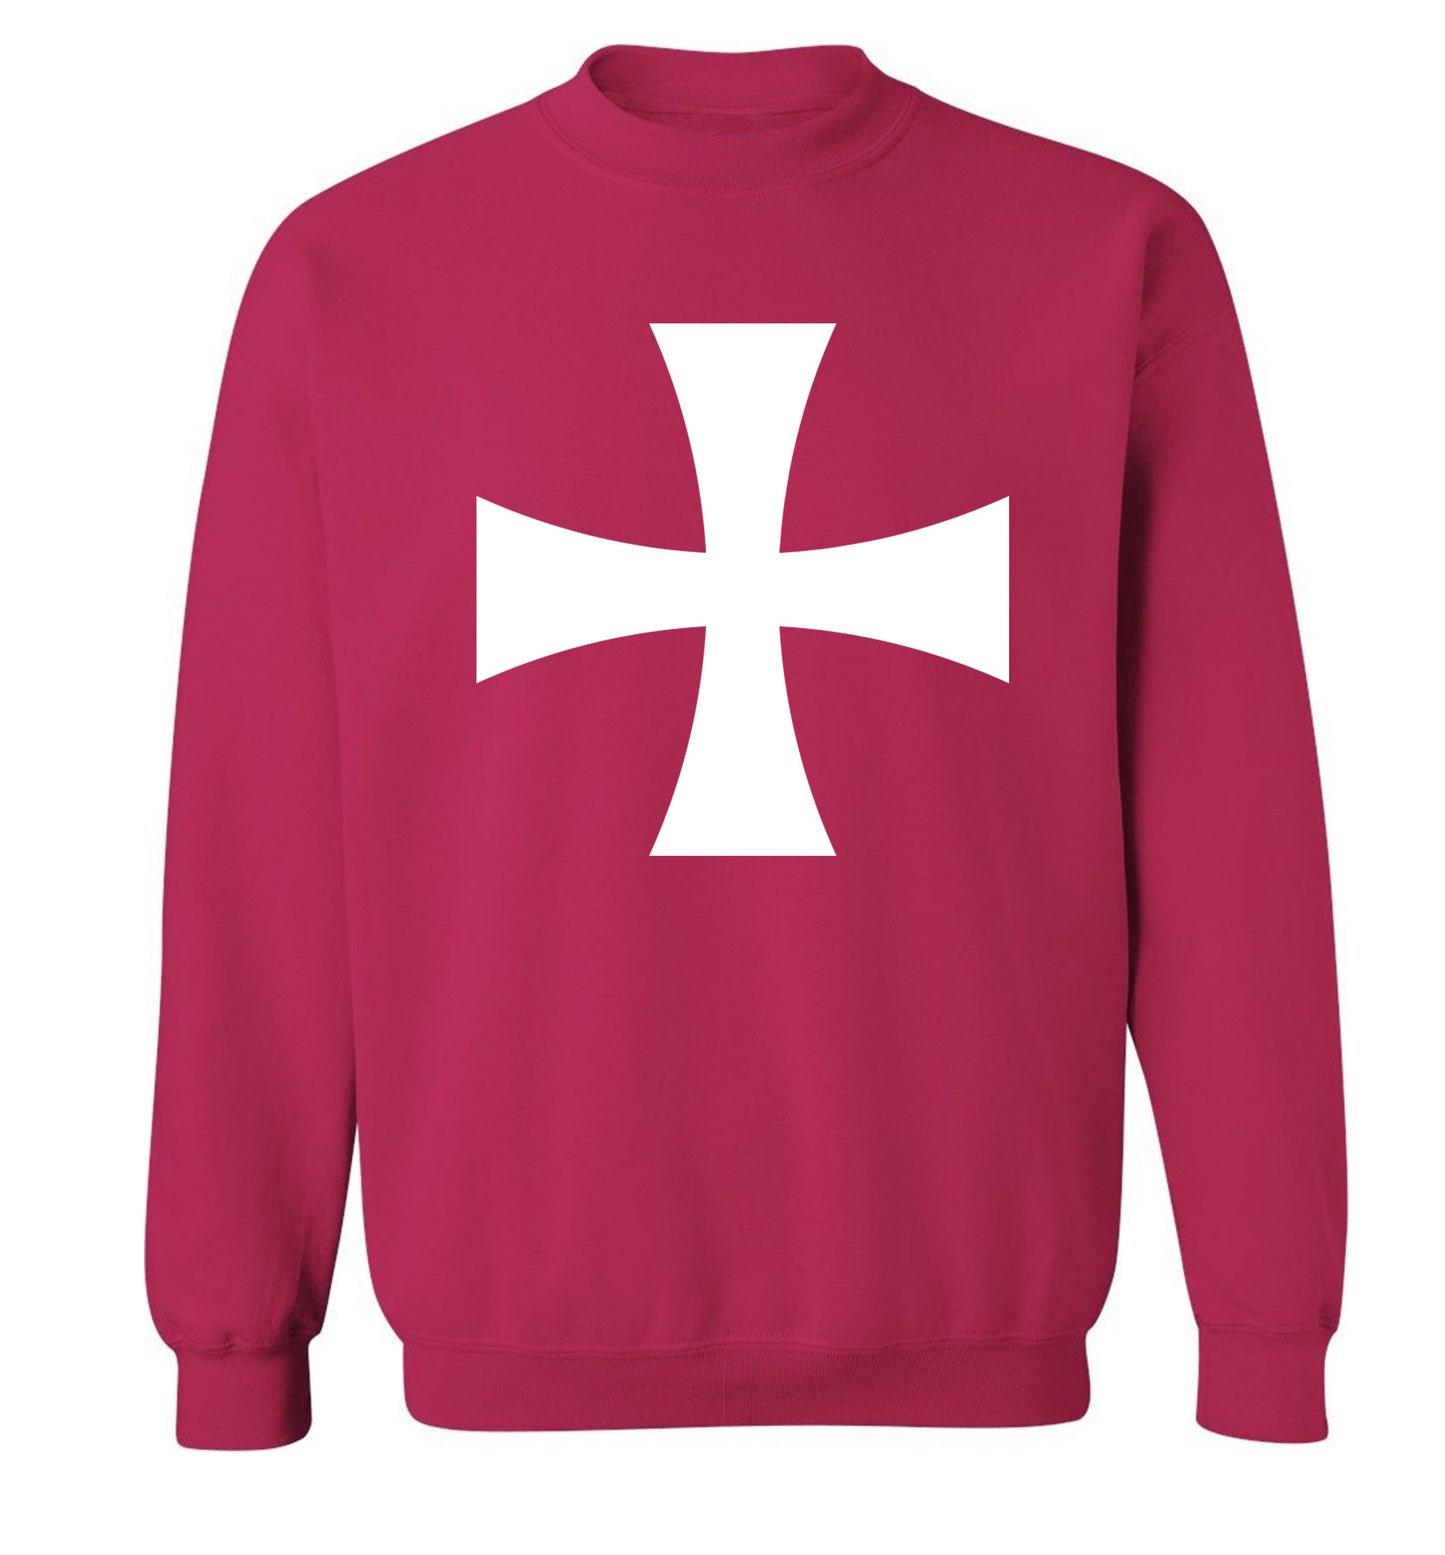 Knights Templar cross Adult's unisex pink Sweater 2XL